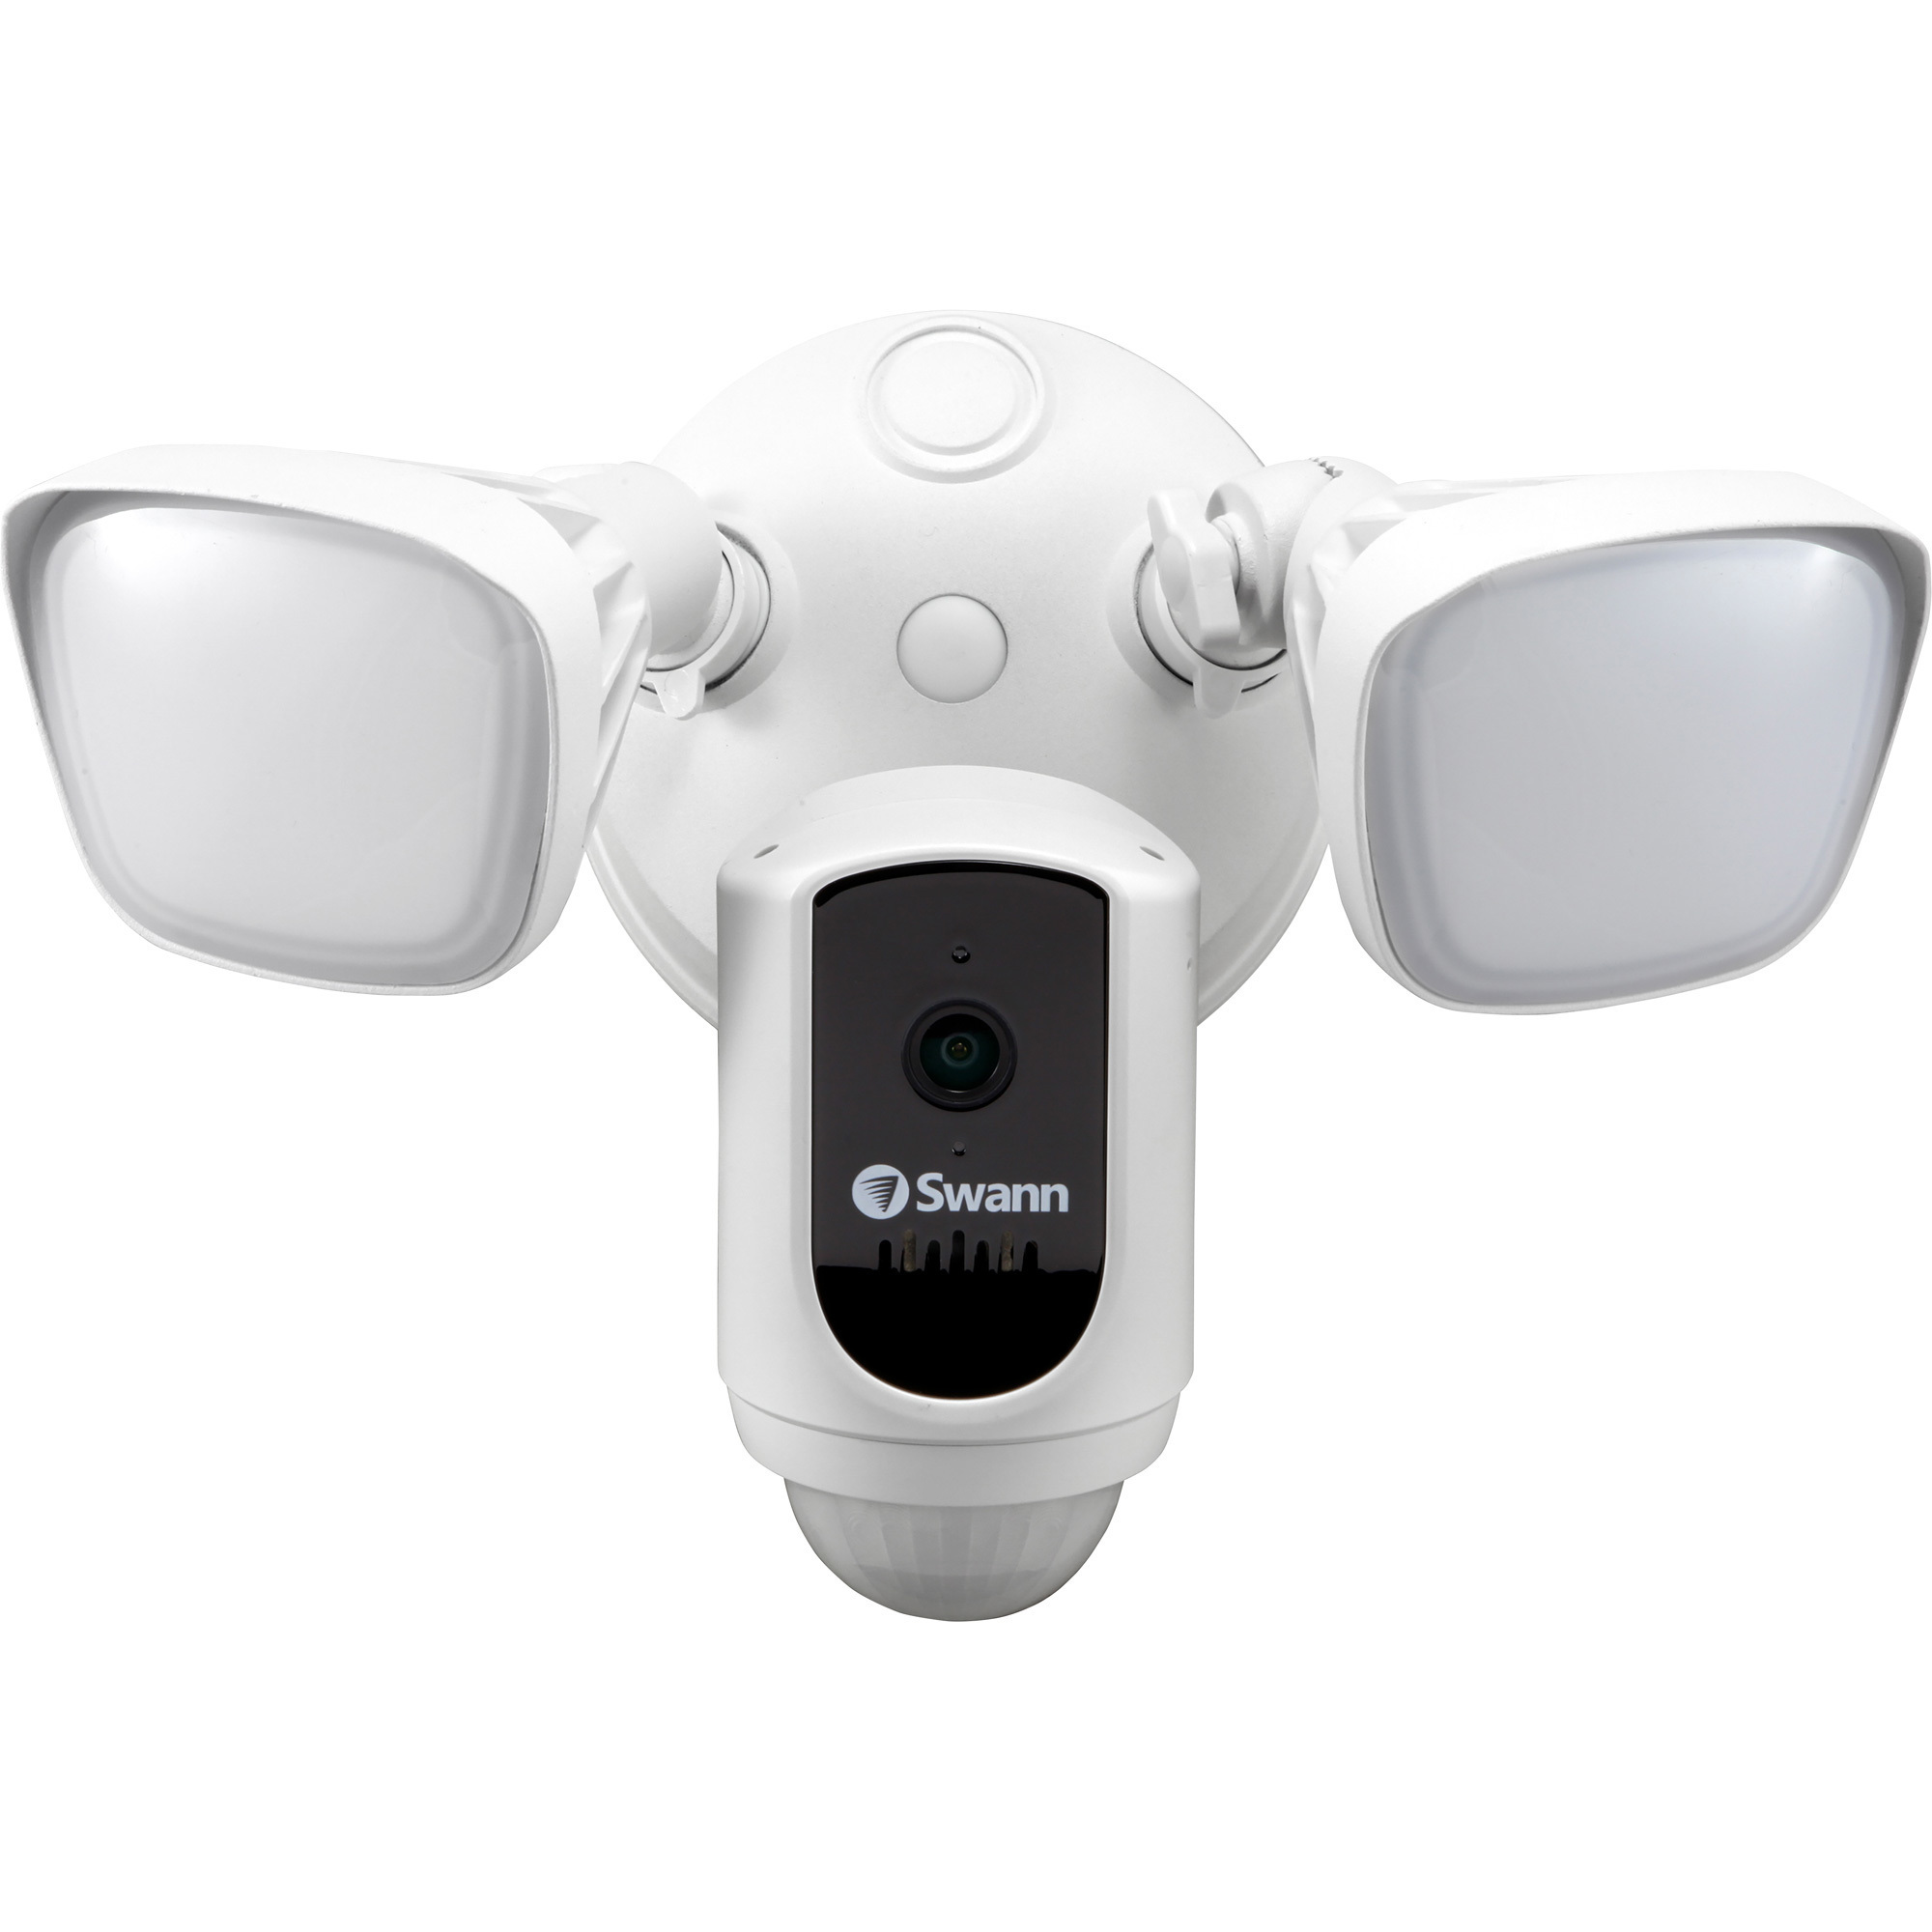 Swann Communications Floodlight Security Camera â 2400 Lumens, White, Model SWIFI-FLOCAM2W-US